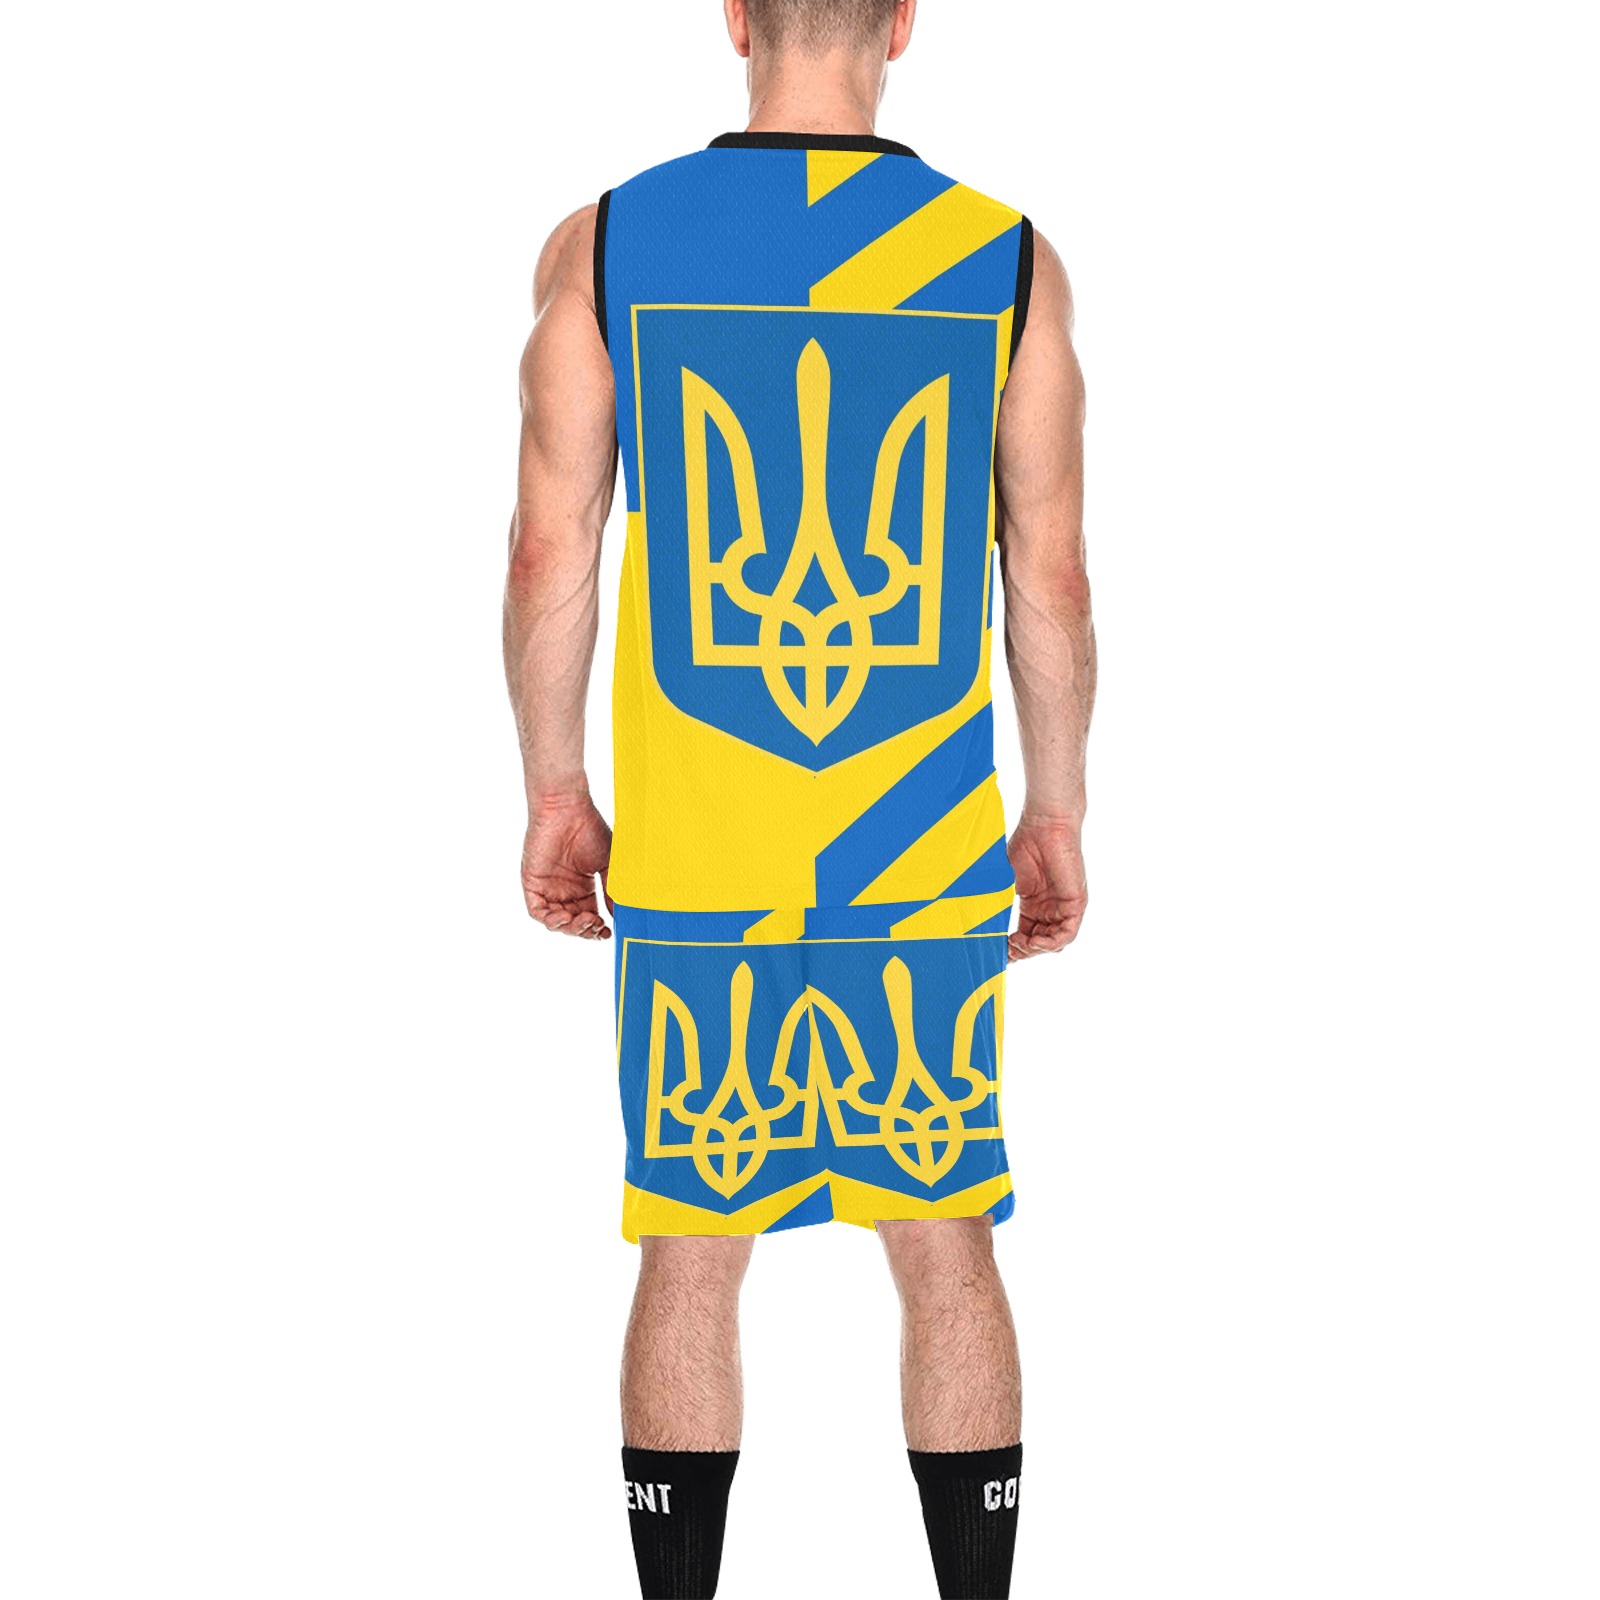 UKRAINE All Over Print Basketball Uniform